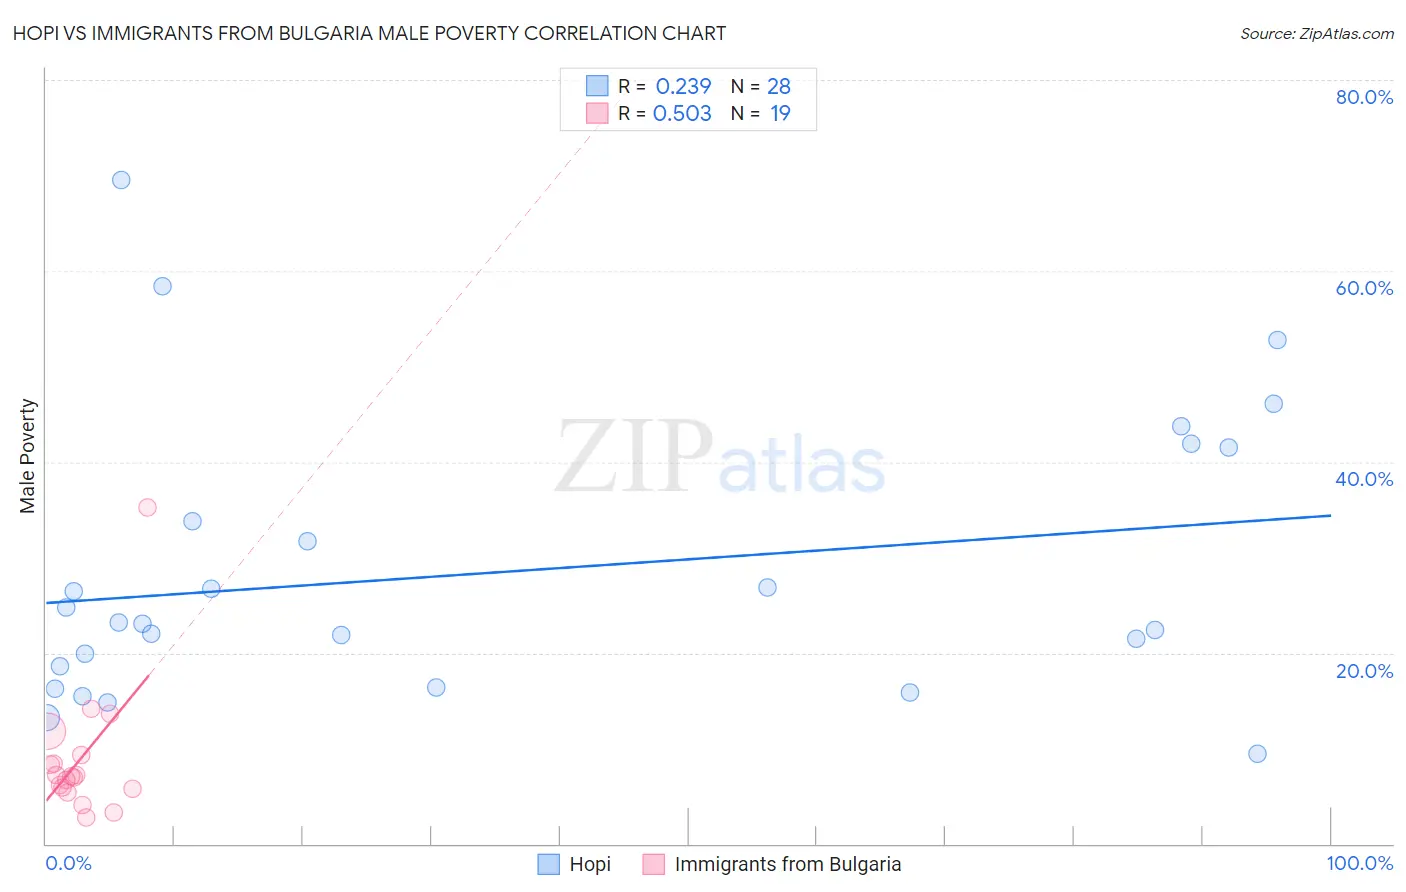 Hopi vs Immigrants from Bulgaria Male Poverty